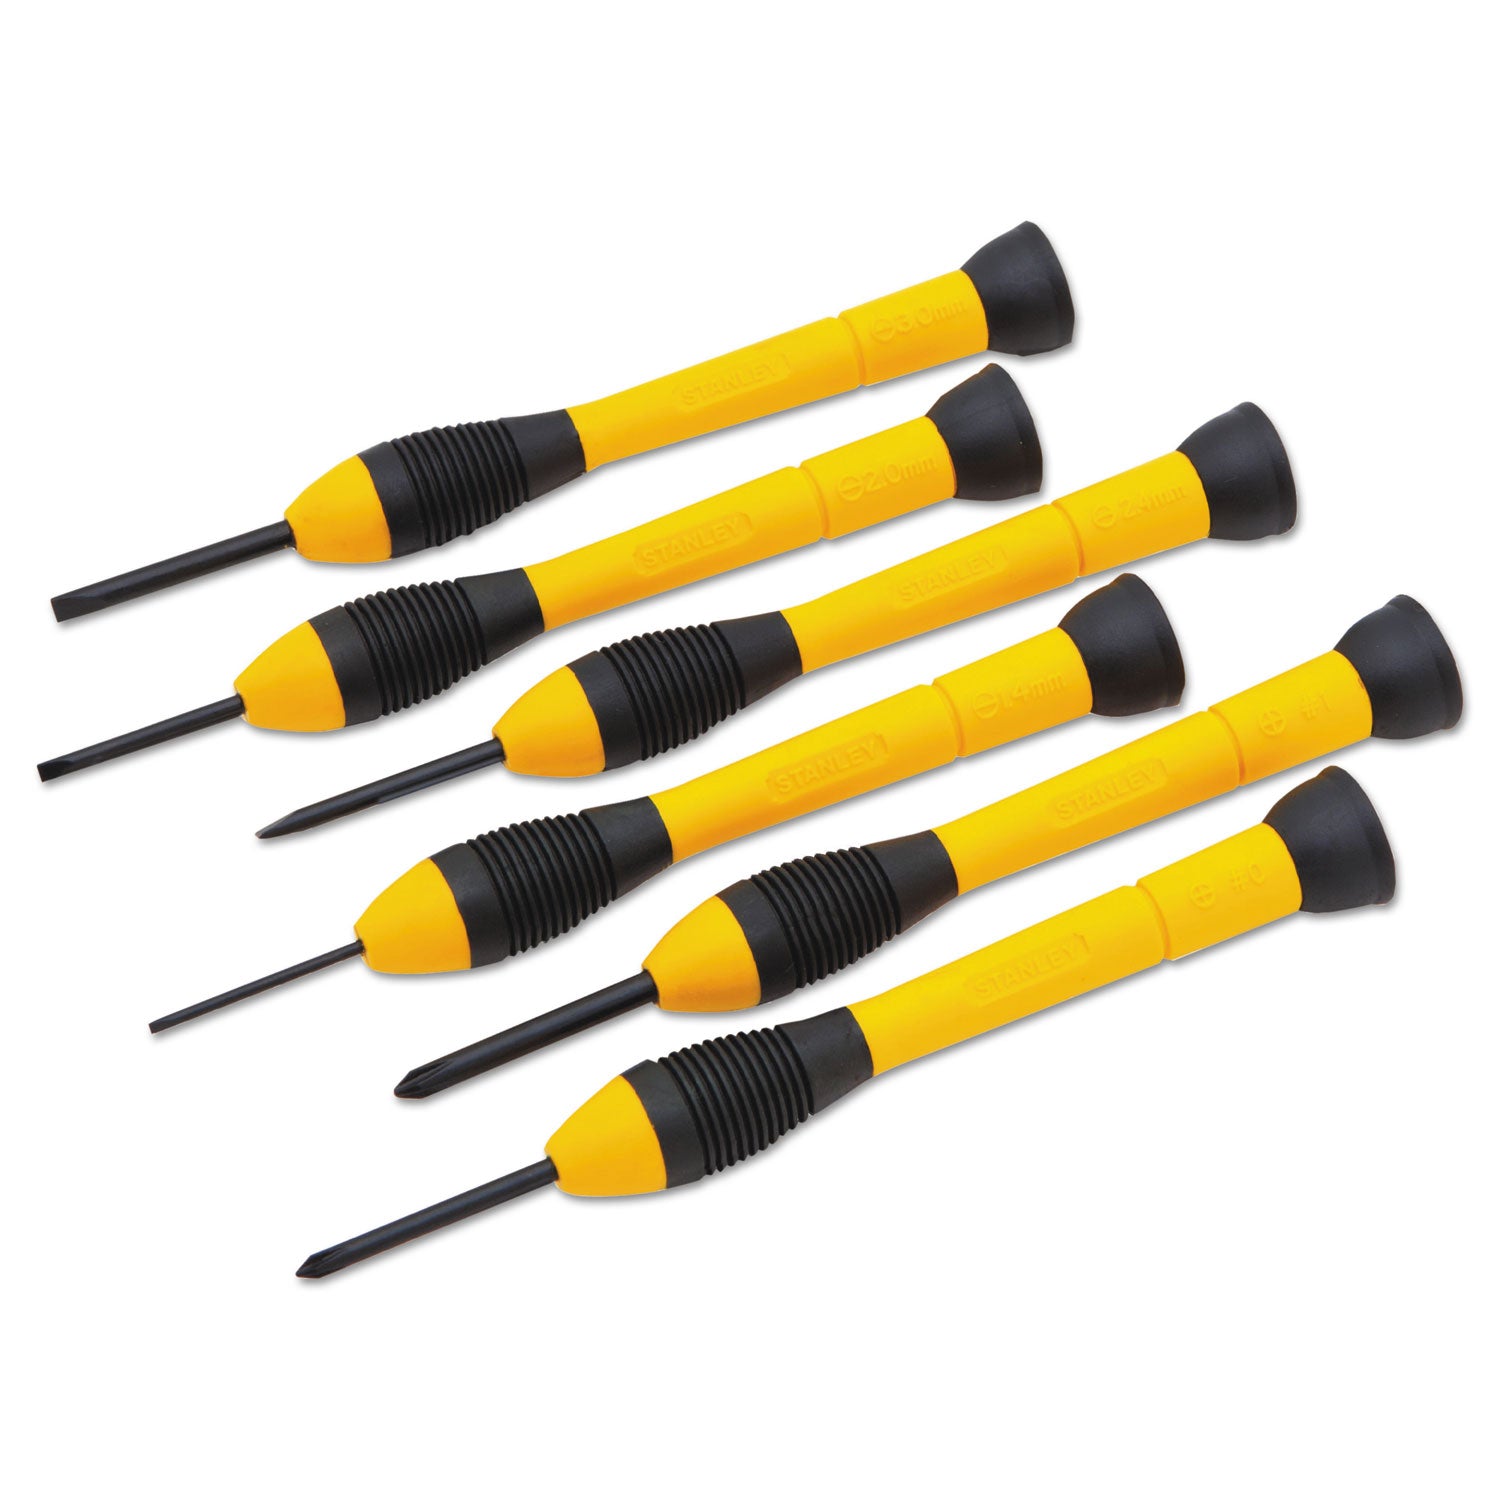 6-piece-precision-screwdriver-set-black-yellow_bos66052 - 1